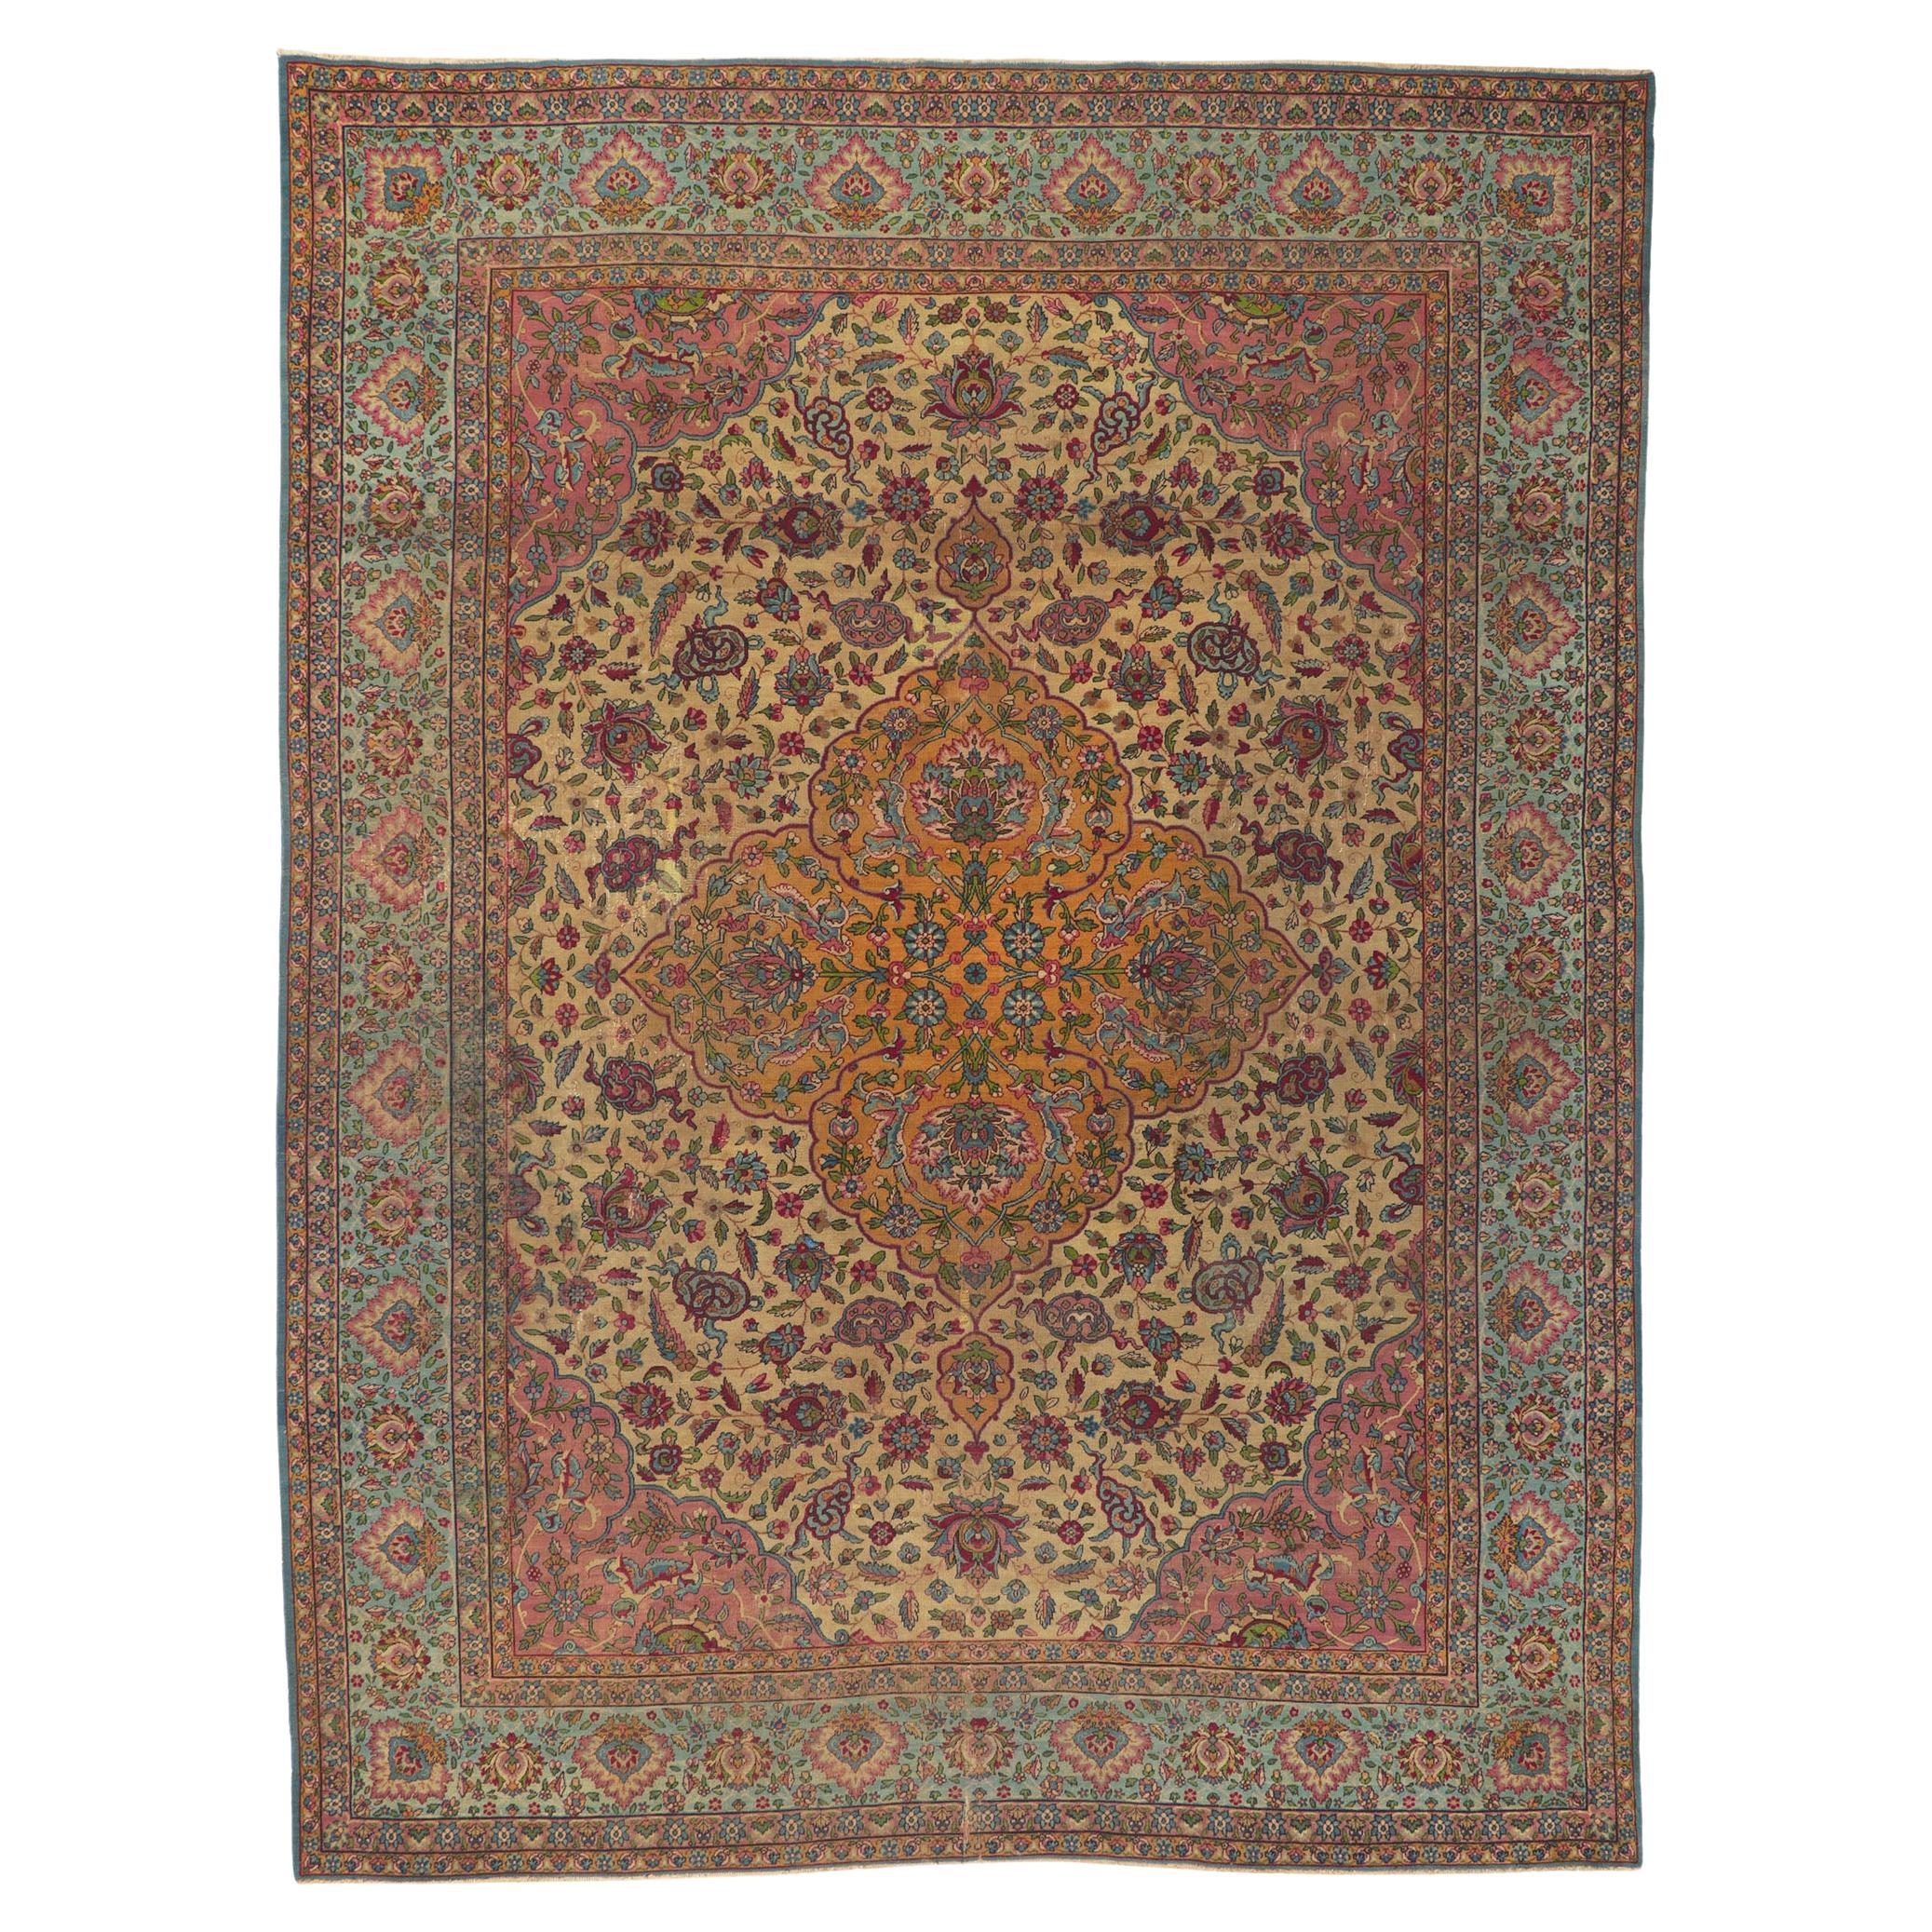 Antique-Worn Persian Kerman Rug, Bridgerton Style Meets Rococo Elegance For Sale